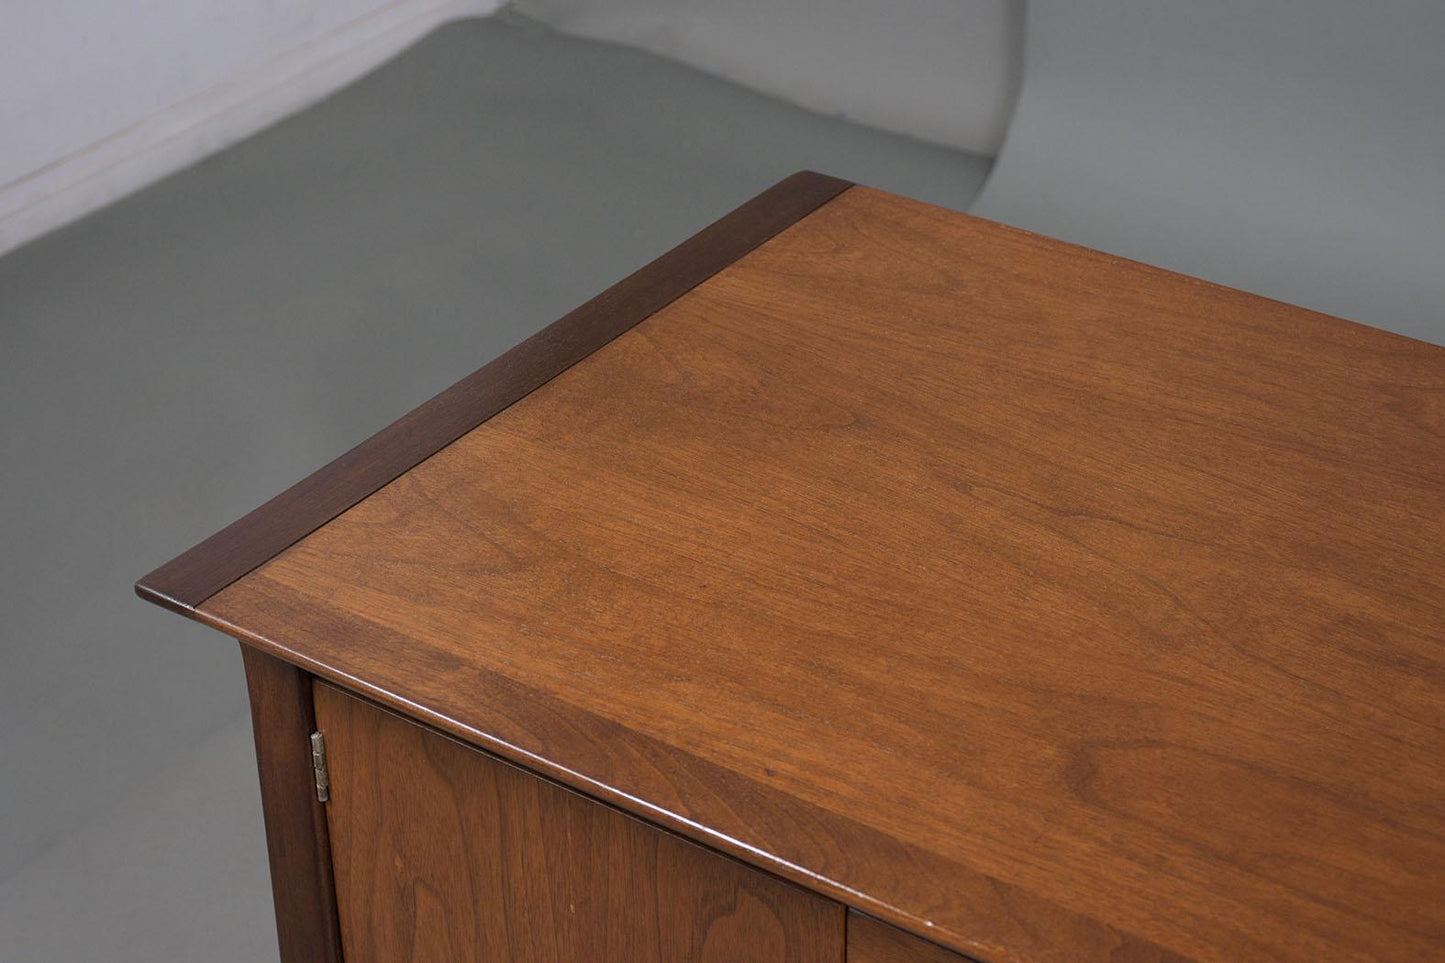 1960s Mid-Century Modern Walnut Dresser: Vintage Elegance Meets Functionality